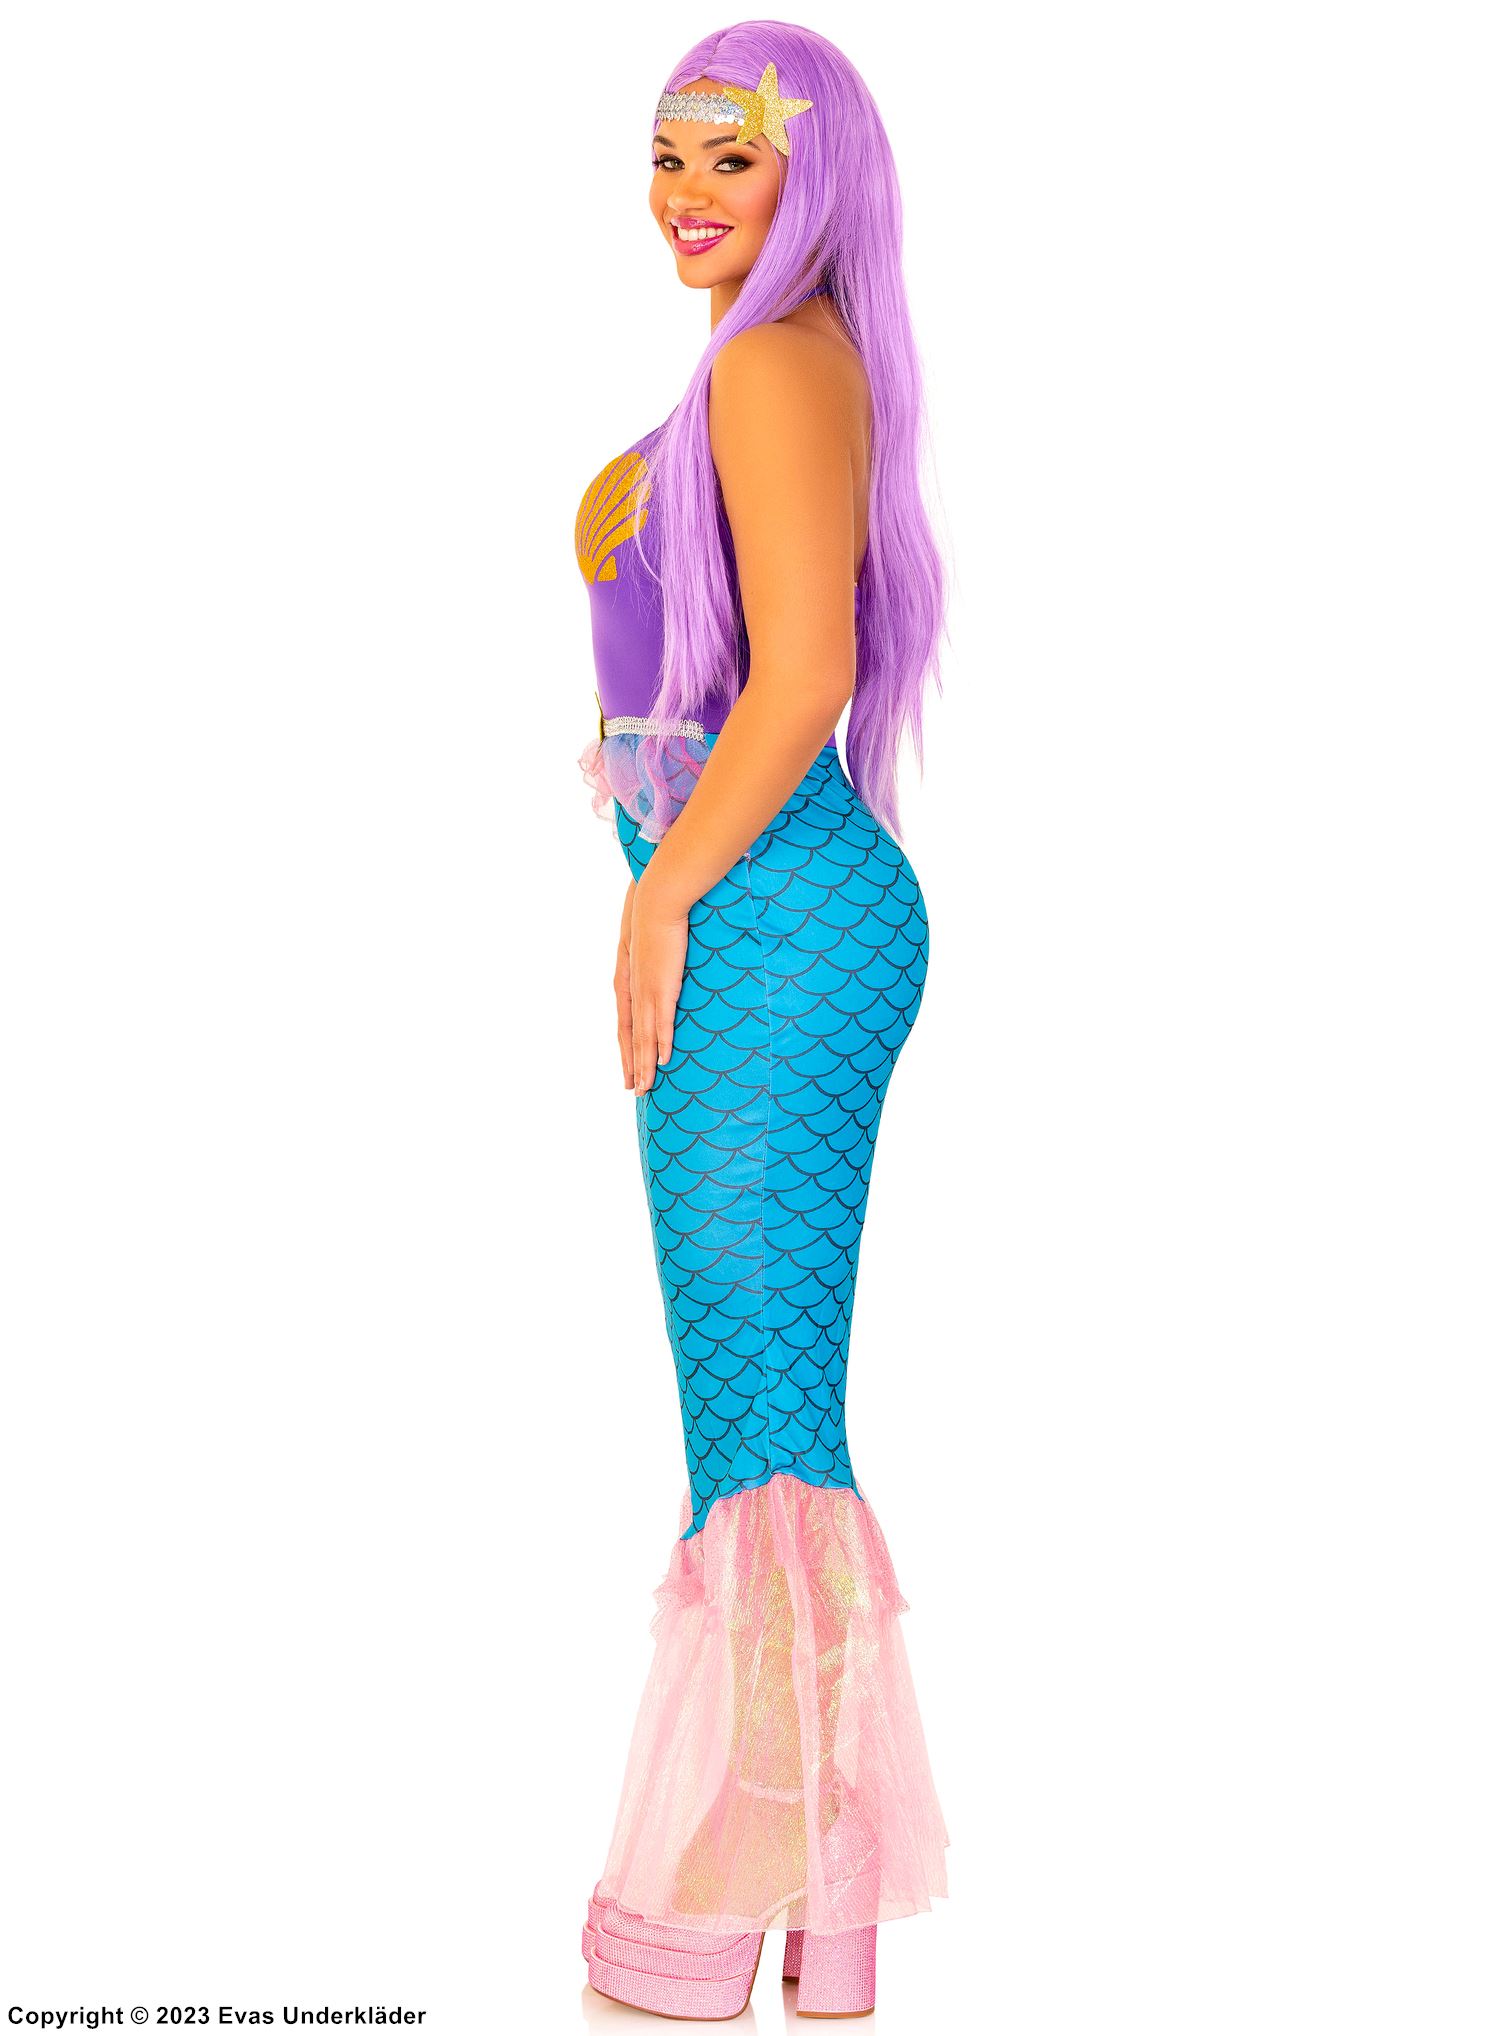 Mermaid, costume dress, ruffle trim, star, seashells